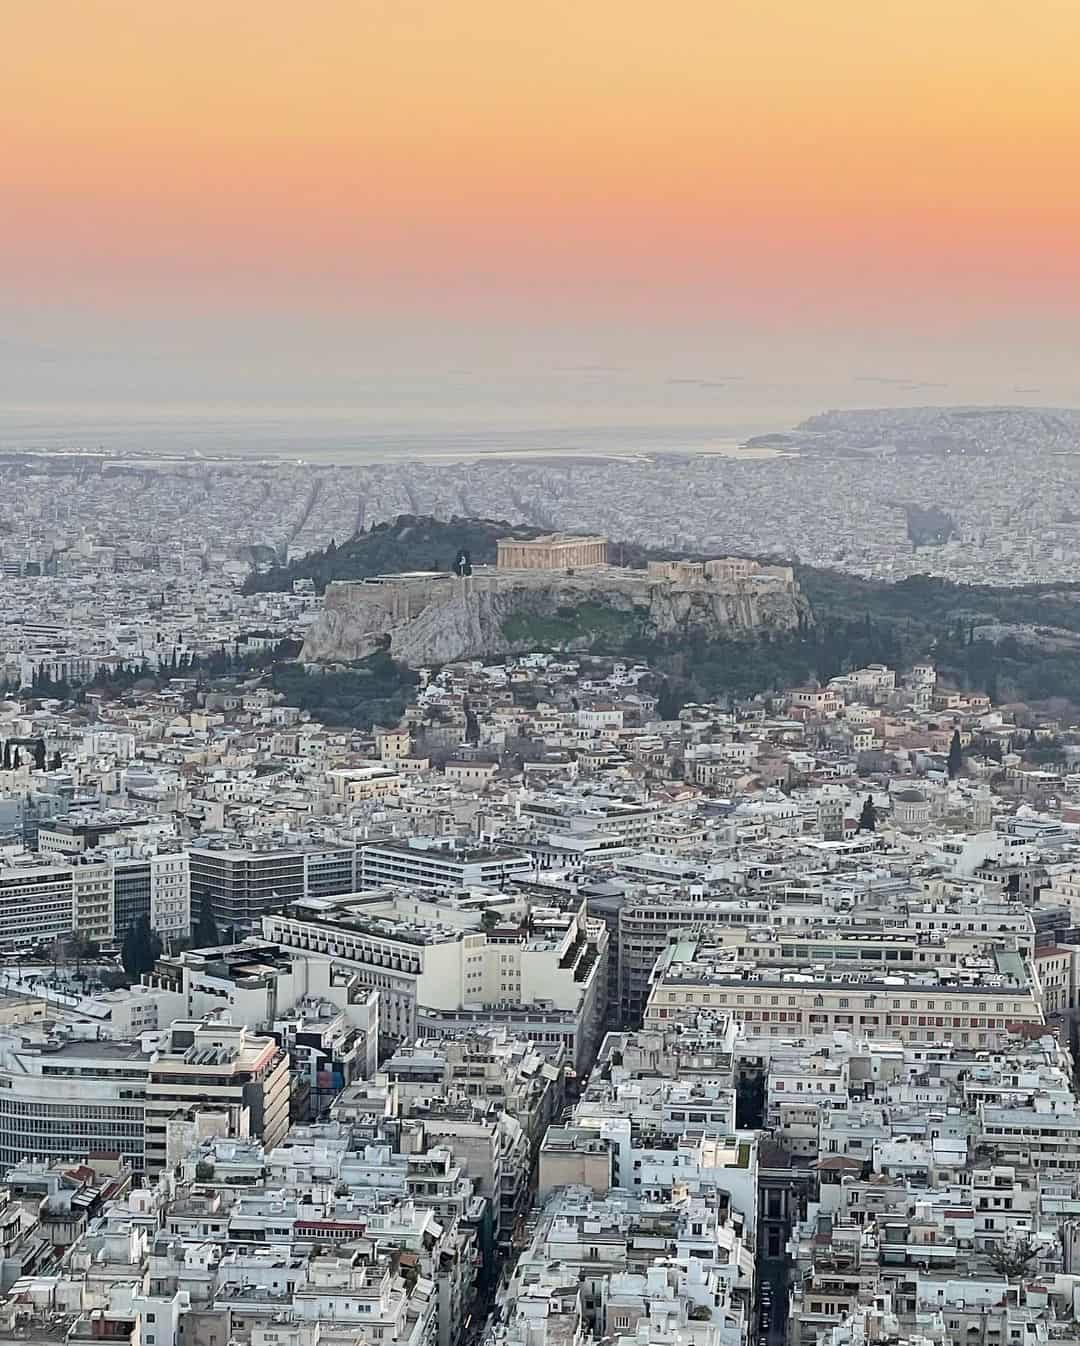 Athens neighborhoods: Sunset from Lycabettus